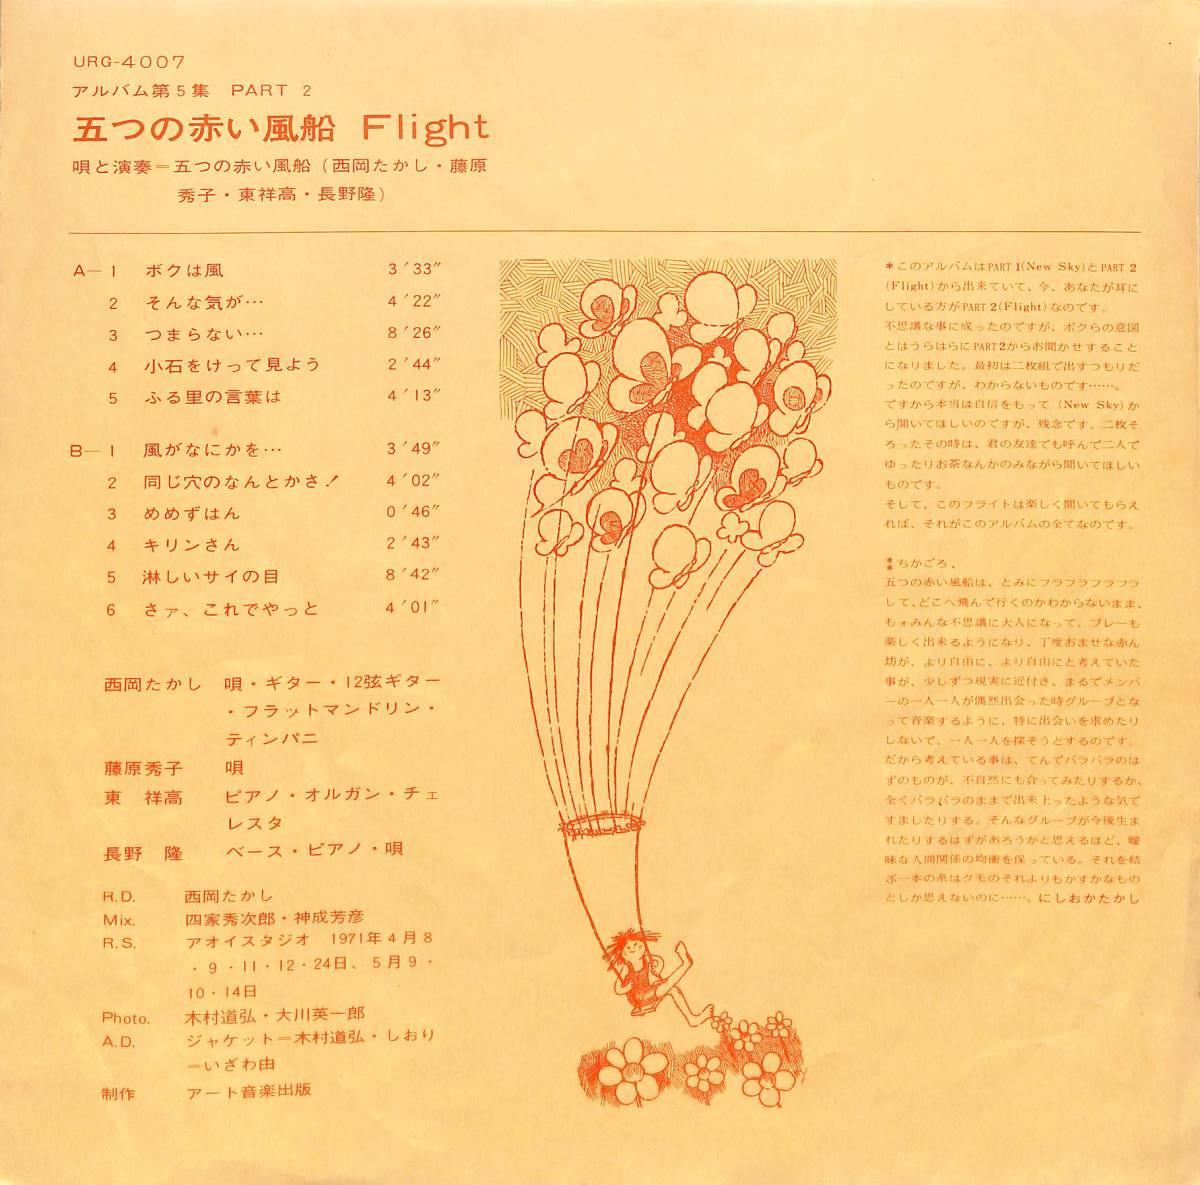 A00550983/LP/五つの赤い風船「アルバム第5集Part 2 Flight」_画像3